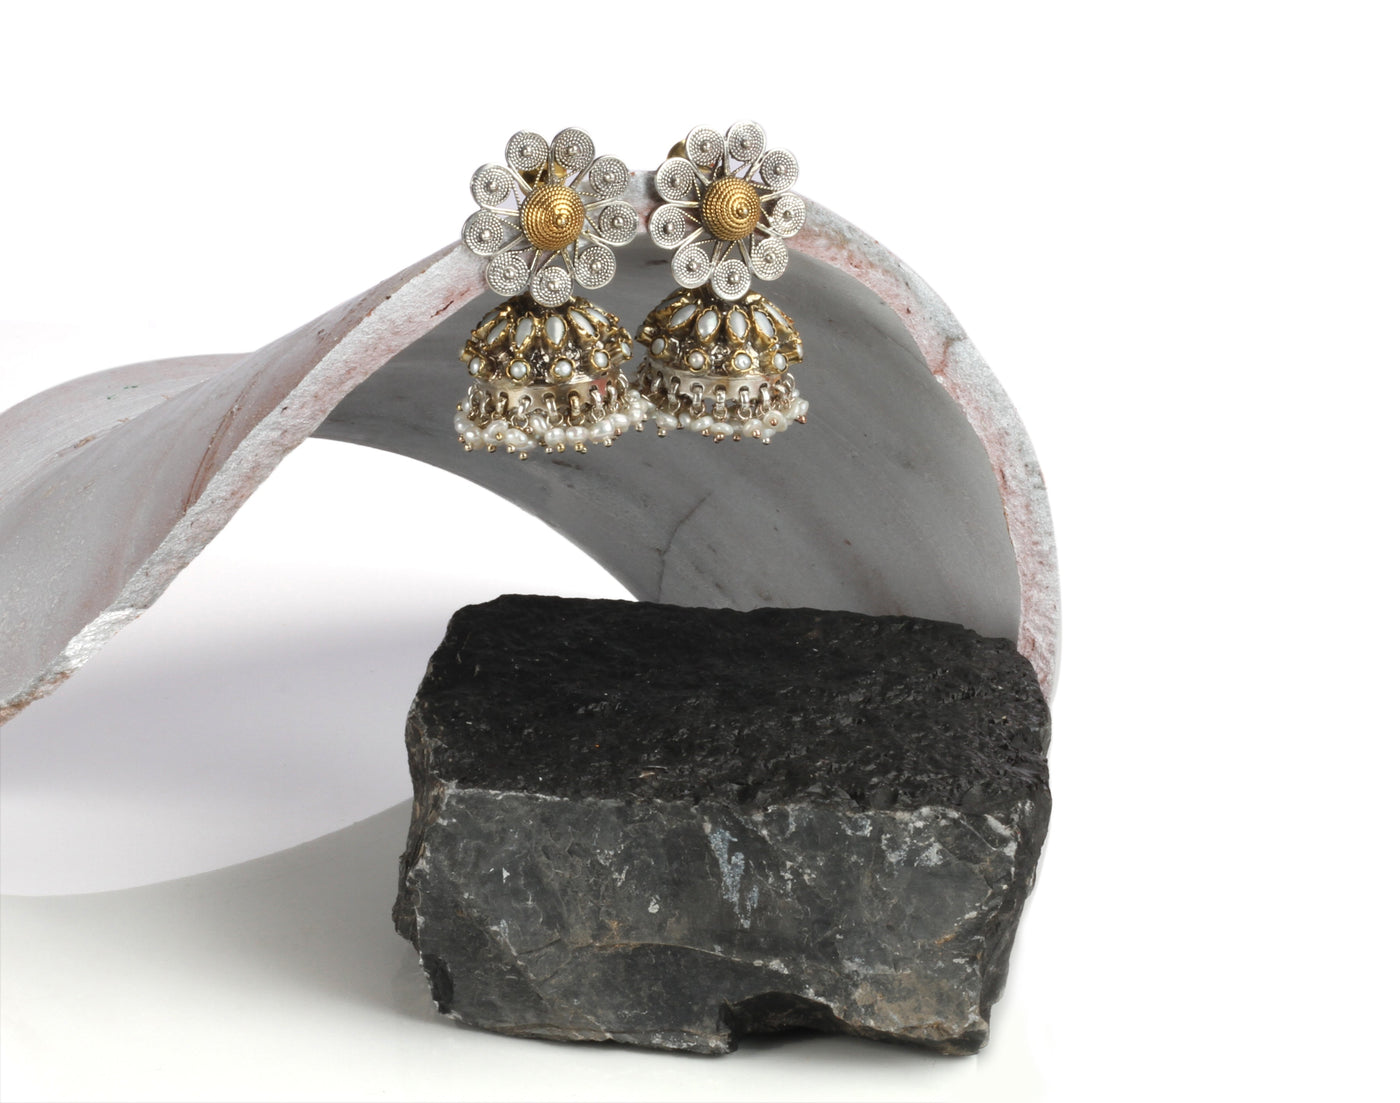 Sangeeta Boochra Silver Earrings-Earrings-Sangeeta Boochra